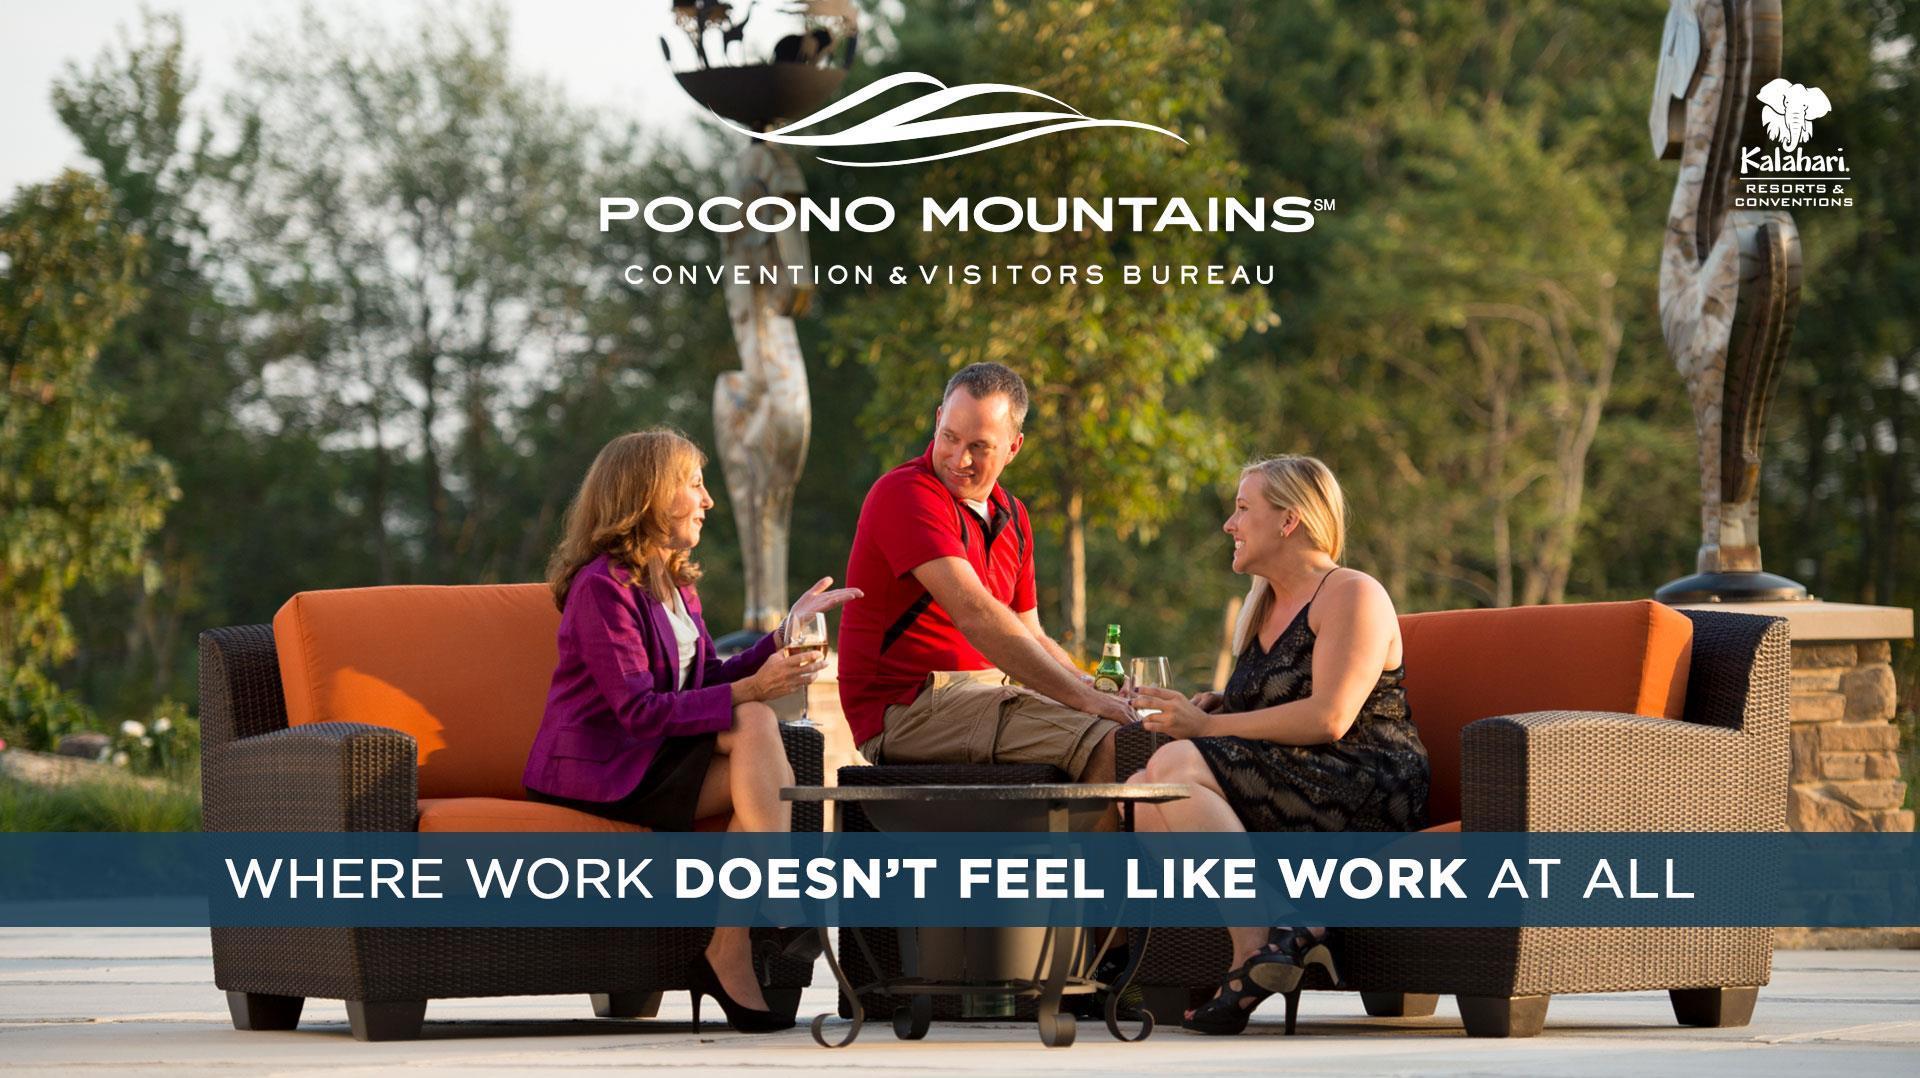 Pocono Mountains Convention & Visitors Bureau in Stroudsburg, PA